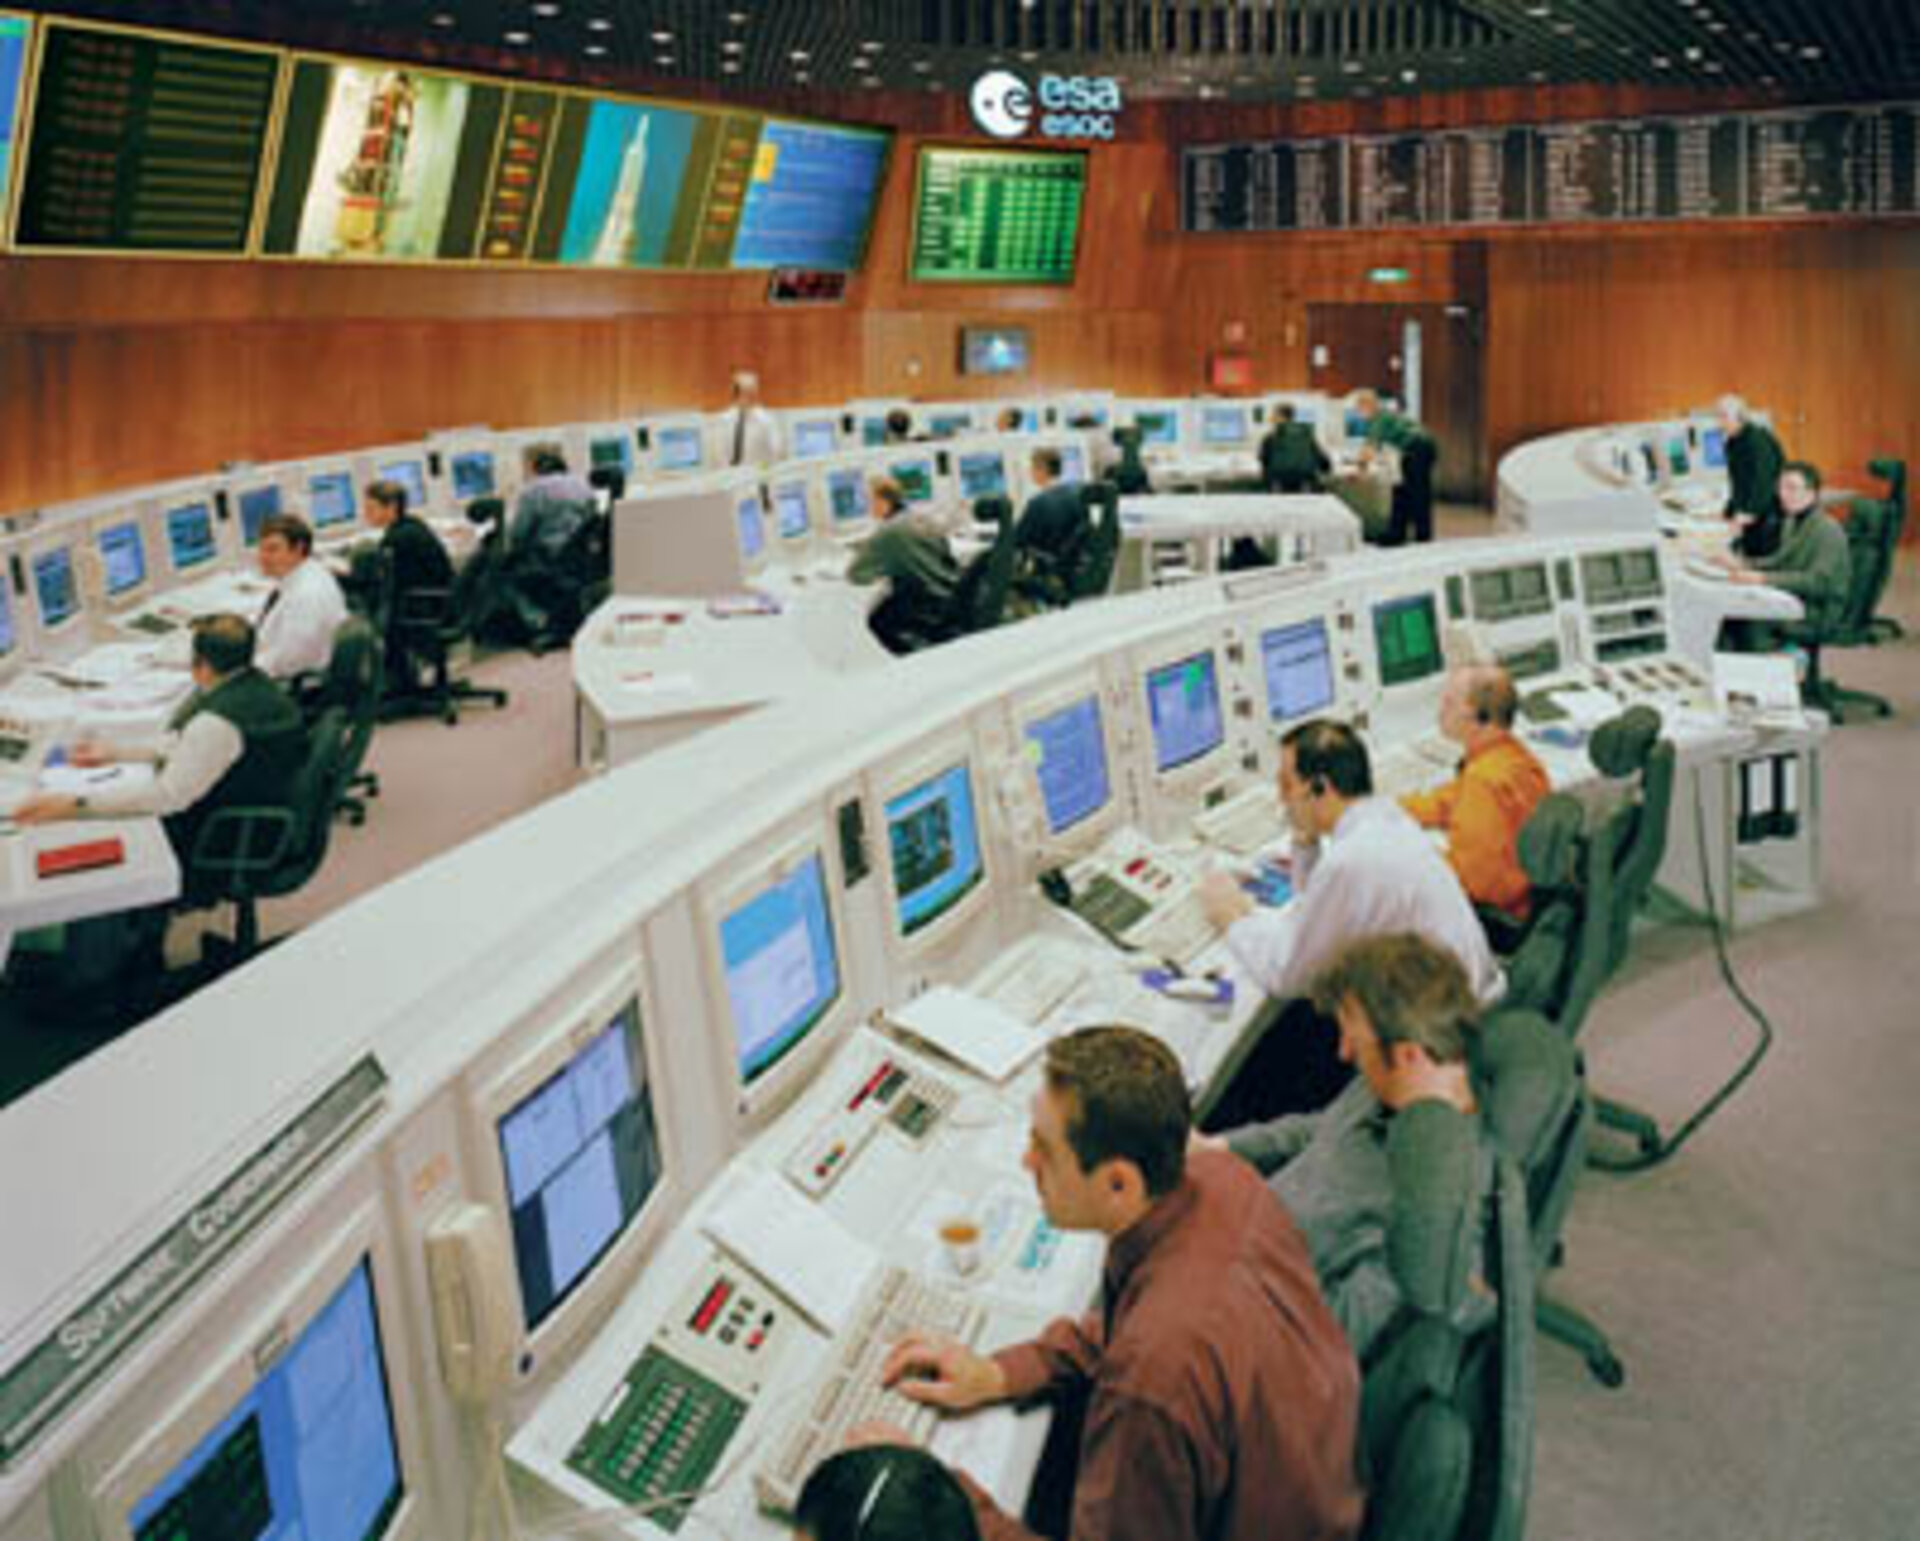 ESOC Main Control Room